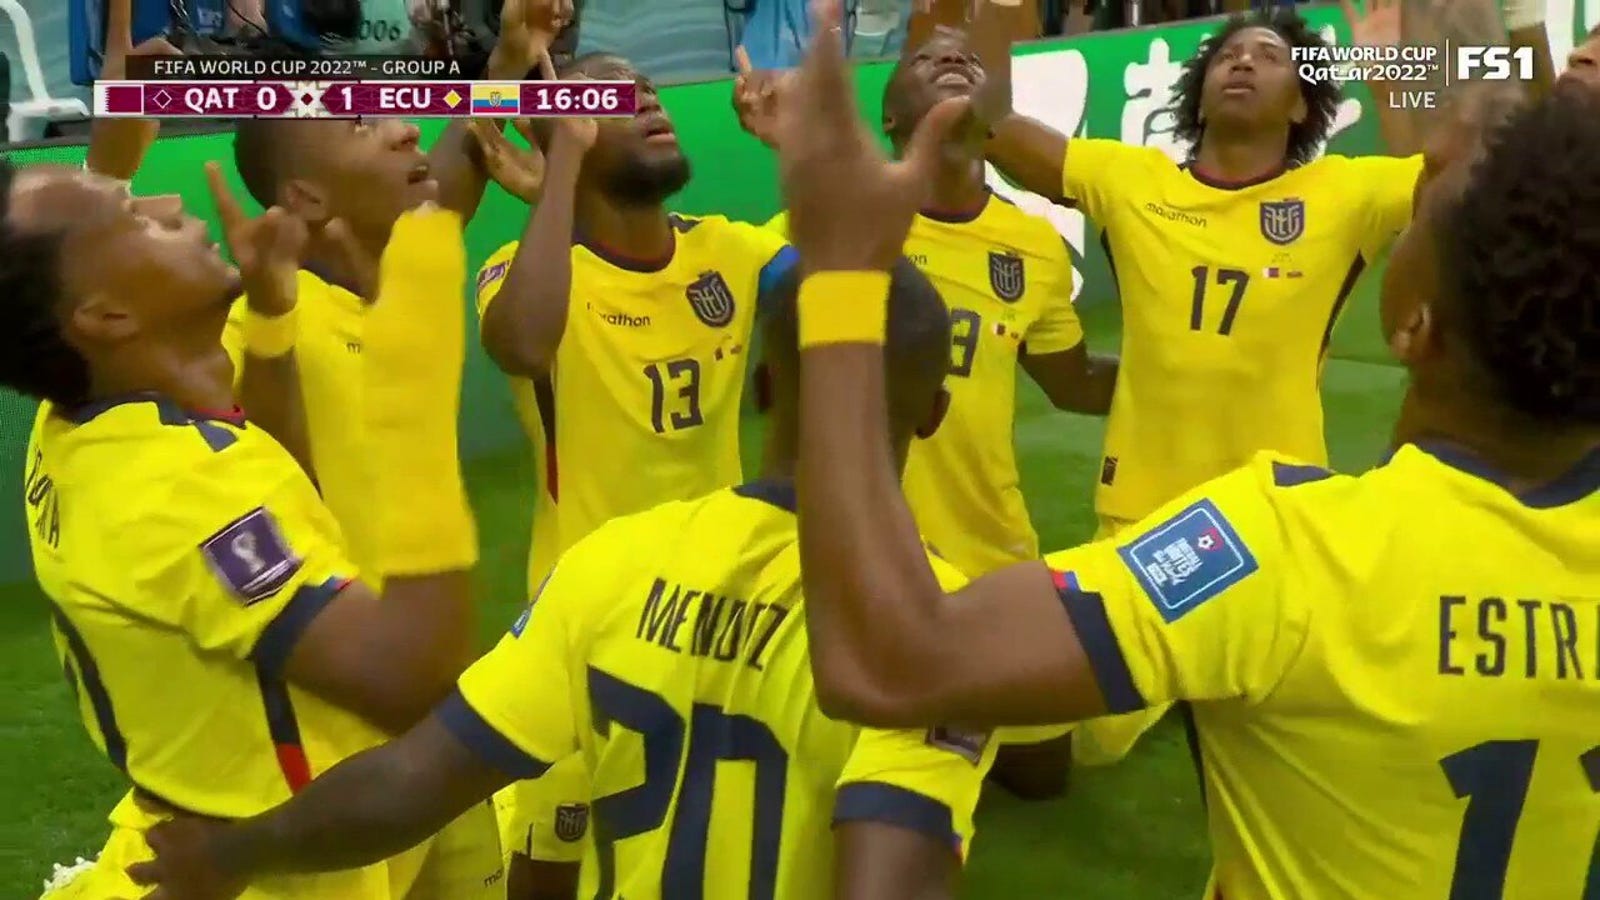 Ecuadors Ener Valencia erzielt in der 15. Minute ein Tor gegen Katar  WM 2022